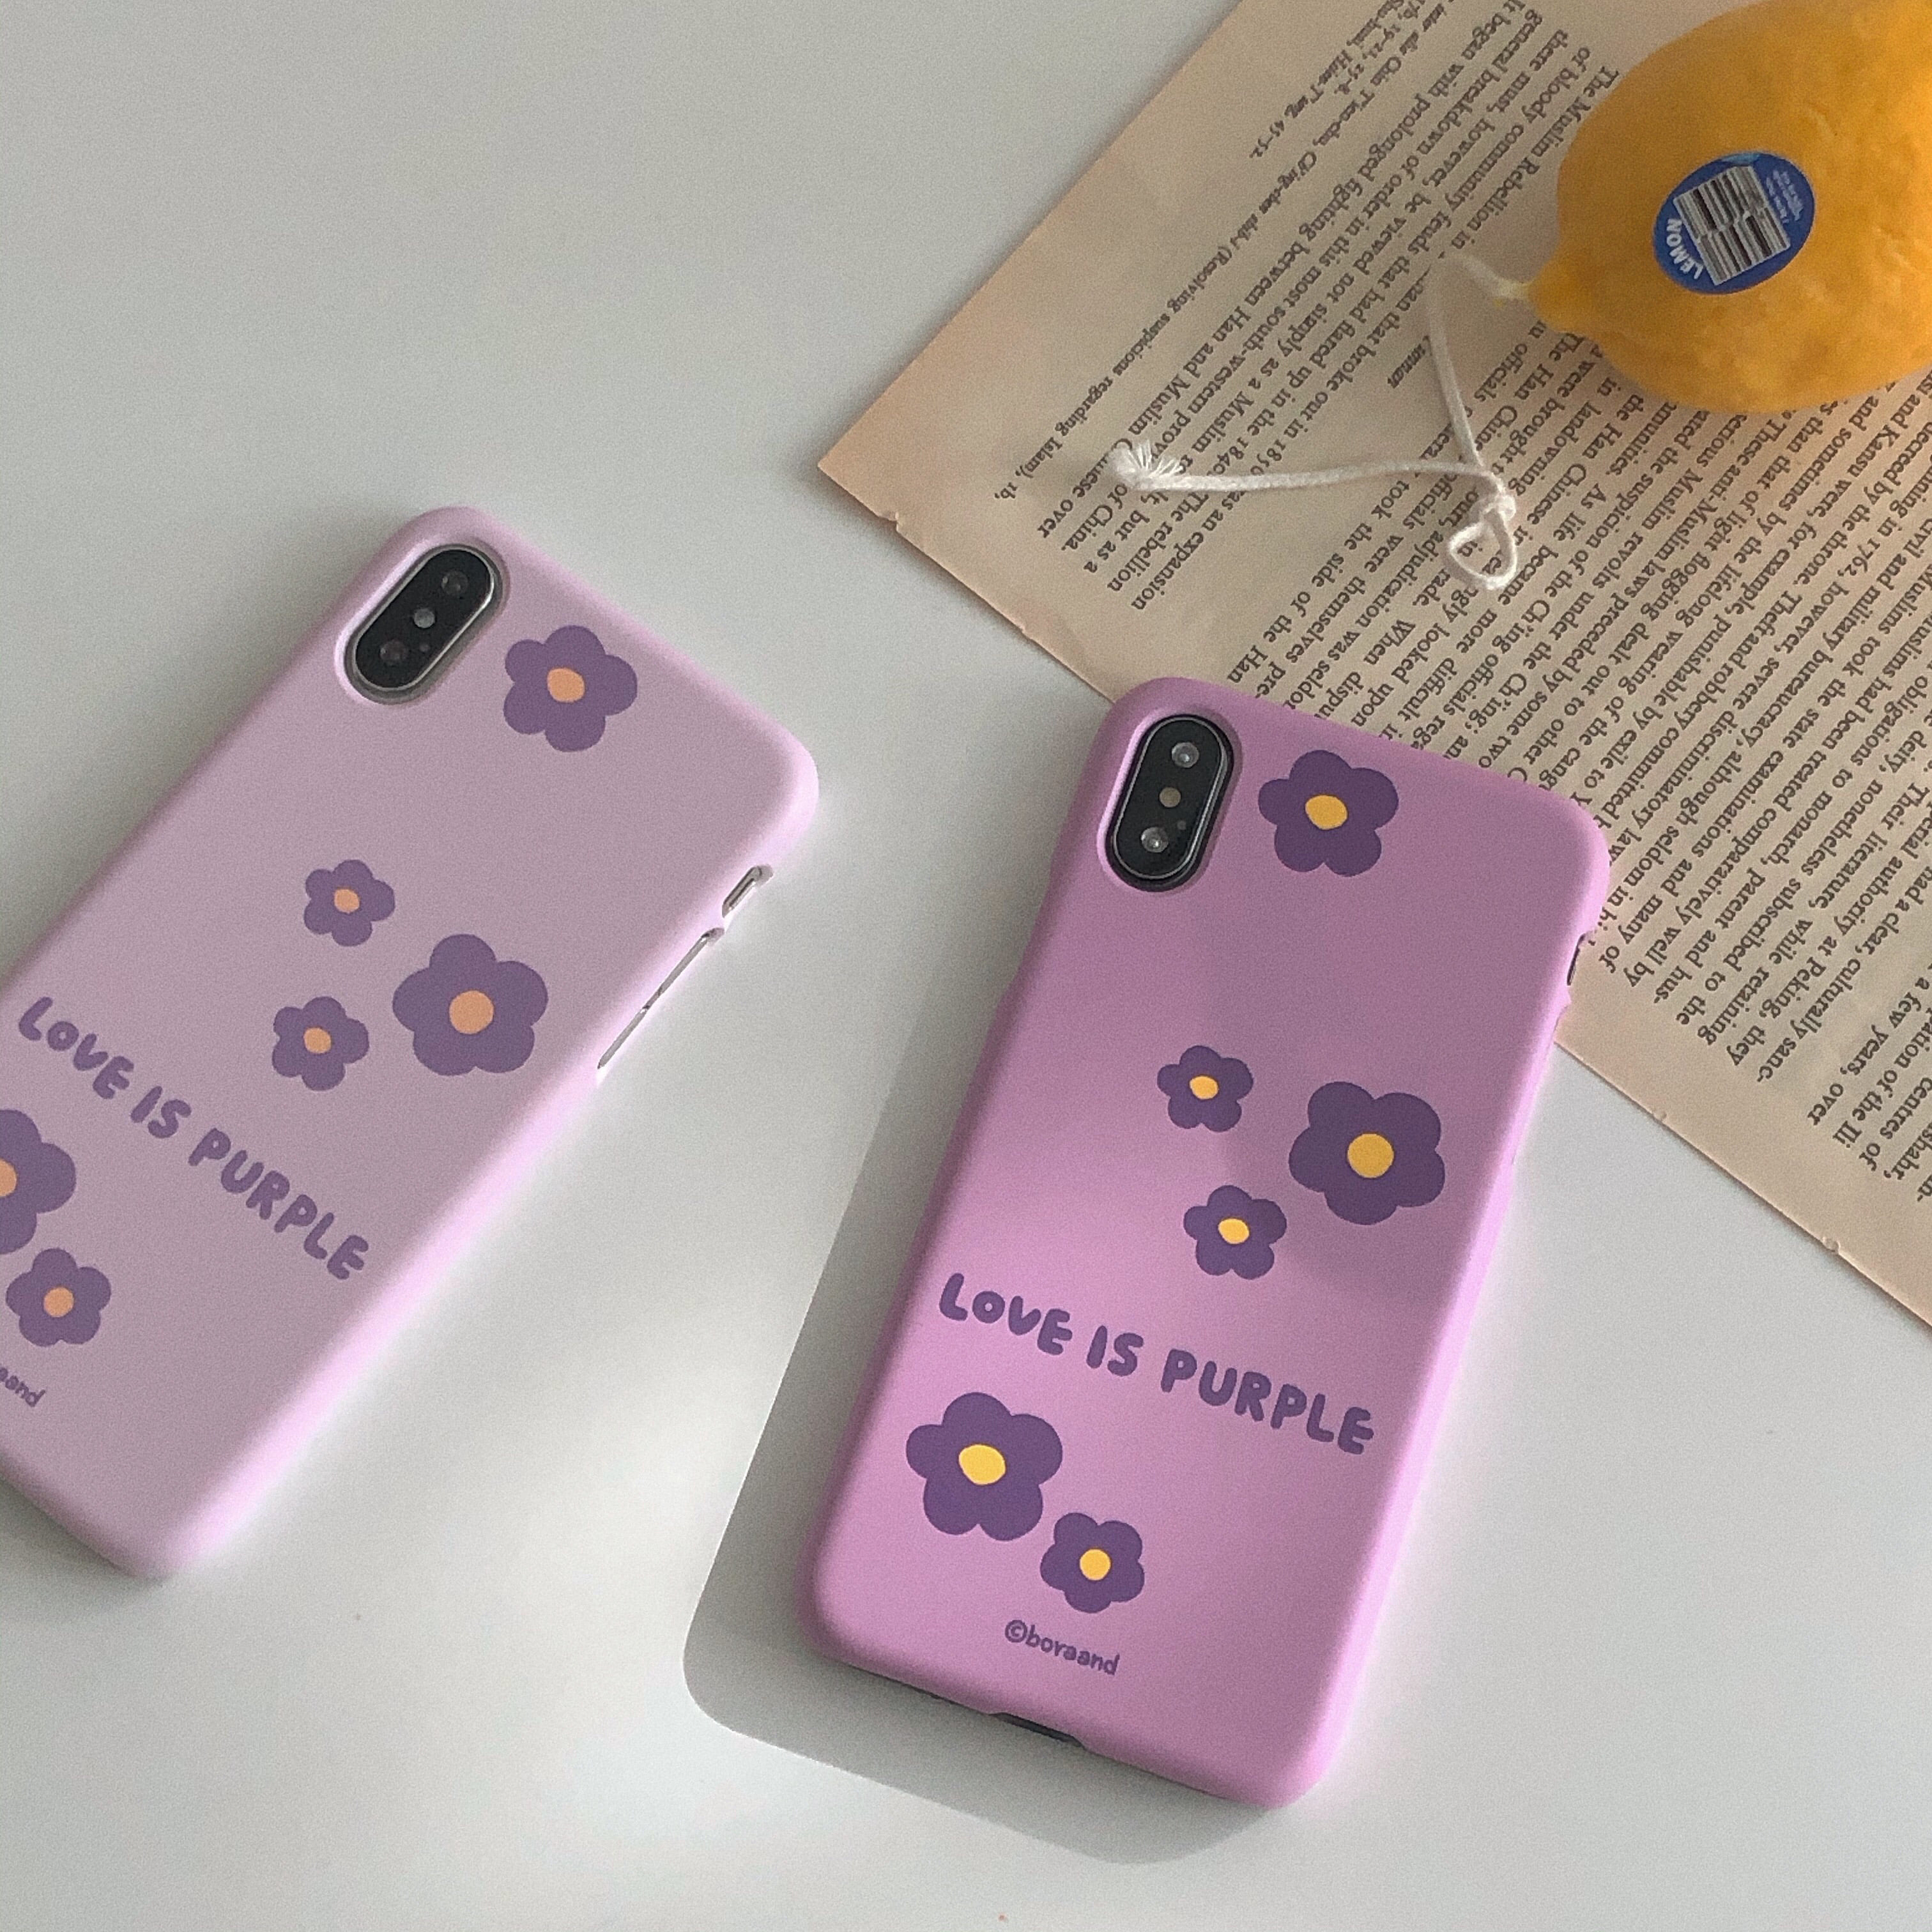 Love is purple (무광하드)